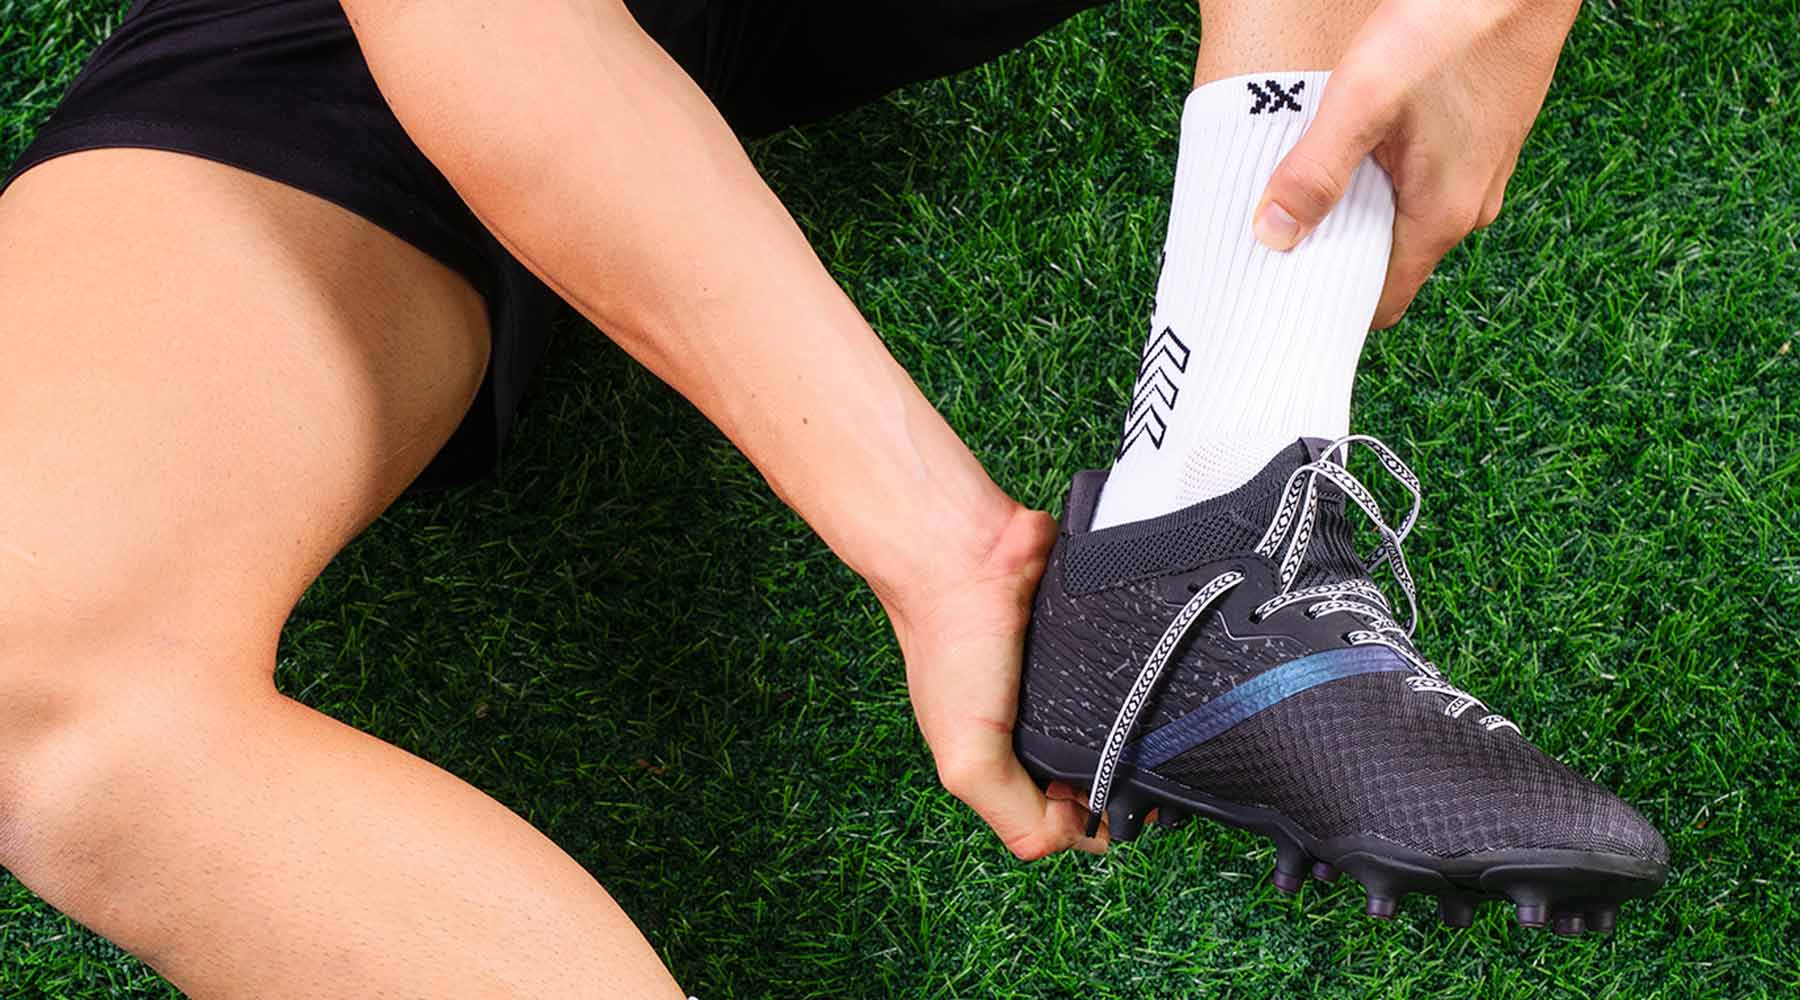 How to Wear Soccer Socks